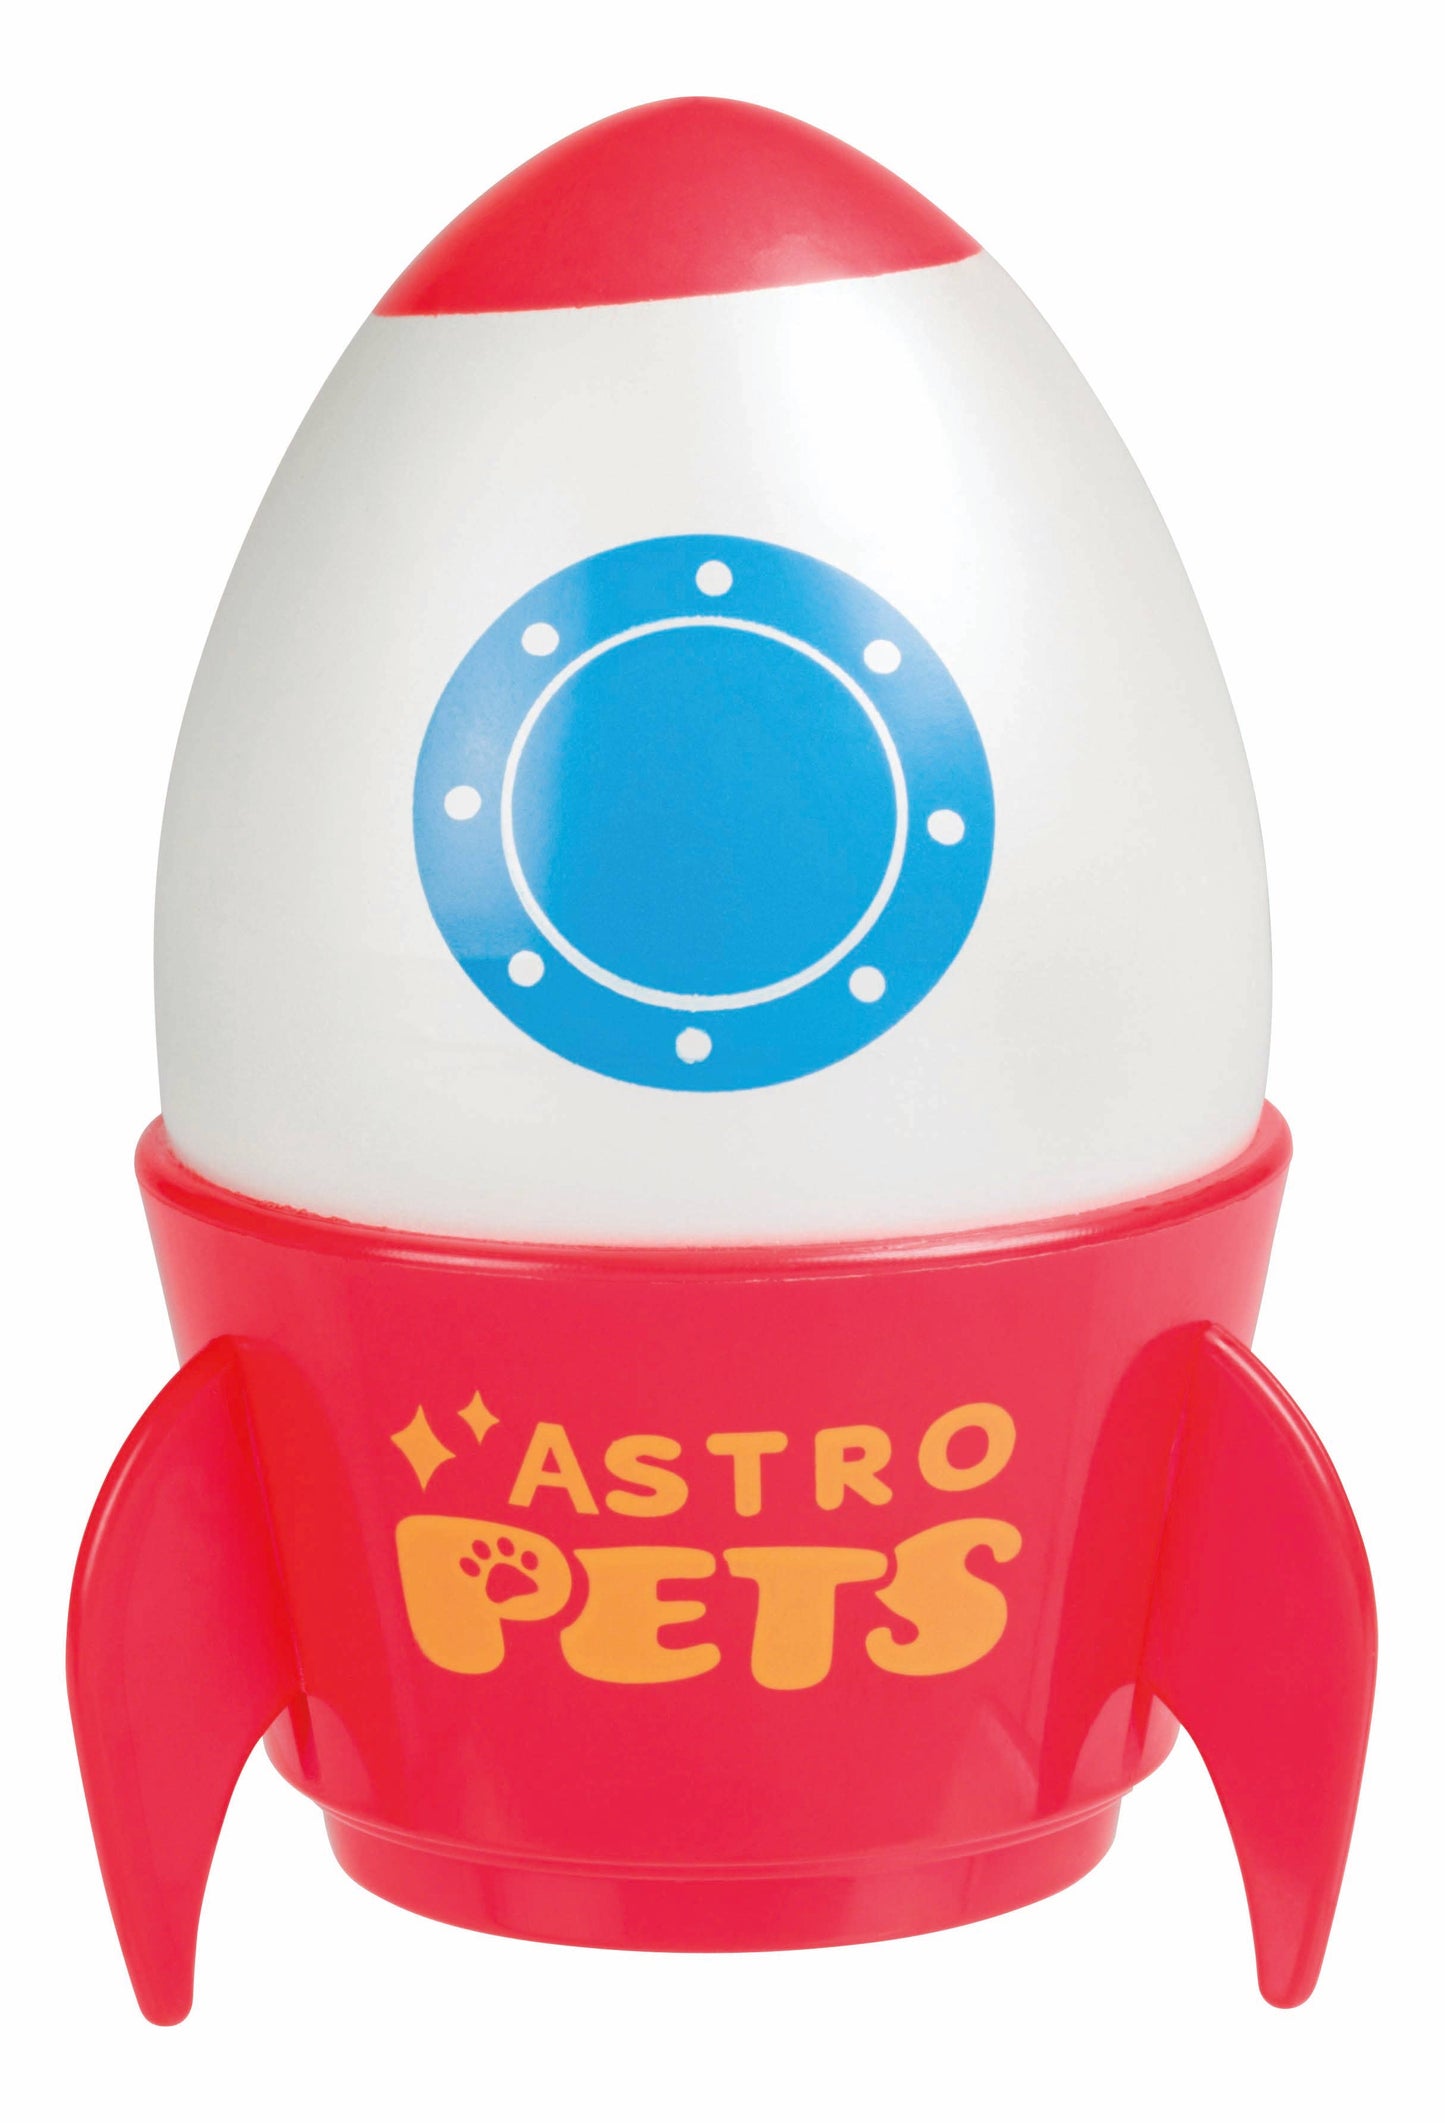 Astro Grow Pets | Assorted